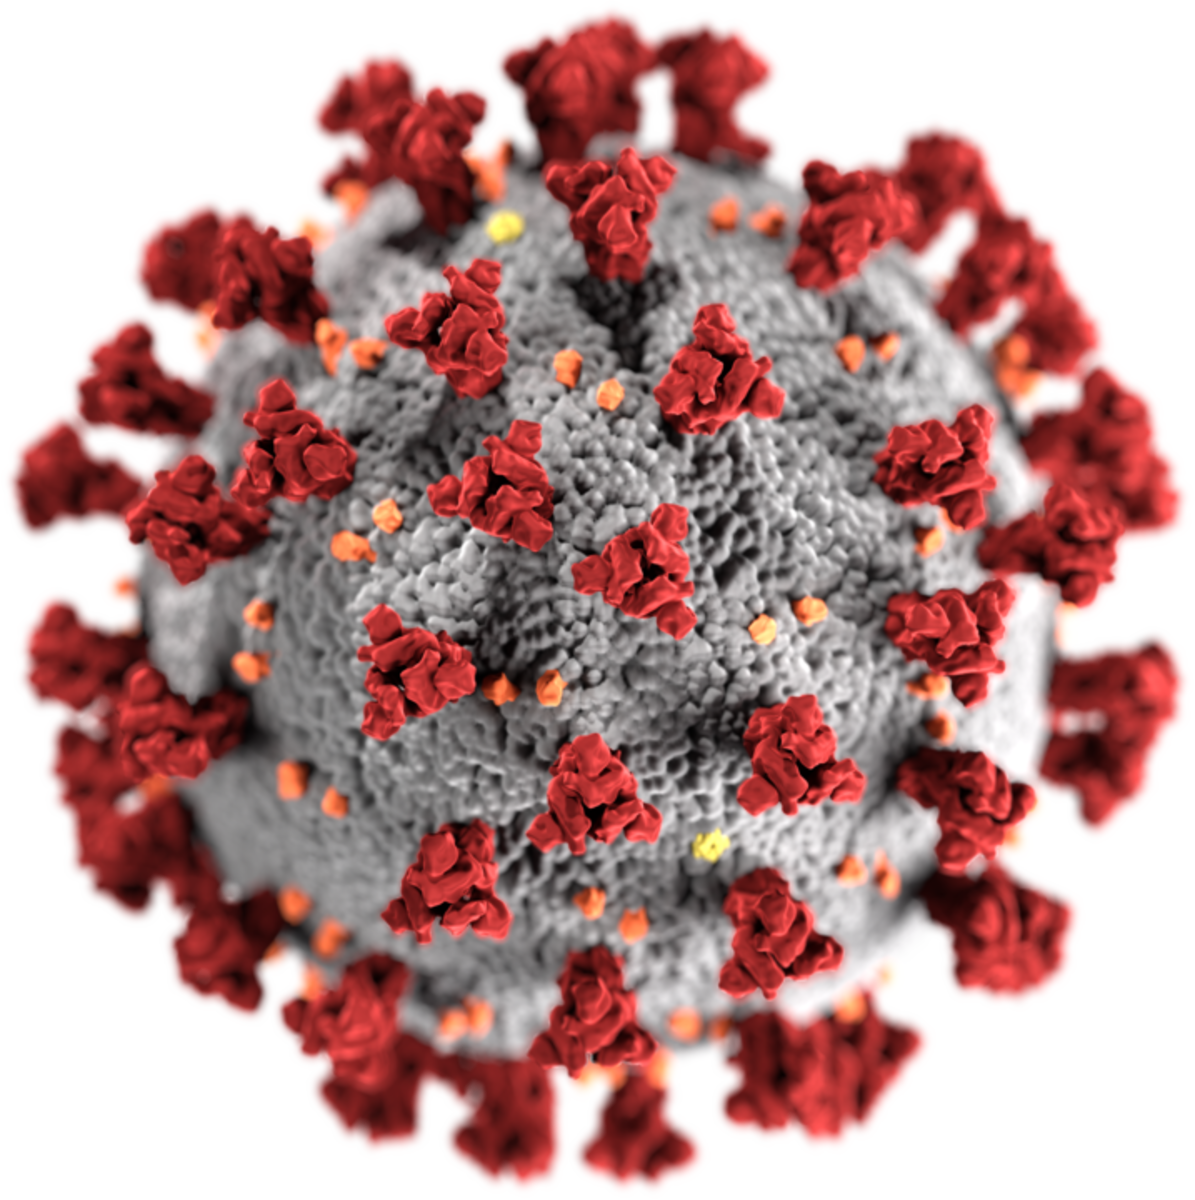 Can Vitamin D Help Guard Against Coronavirus?